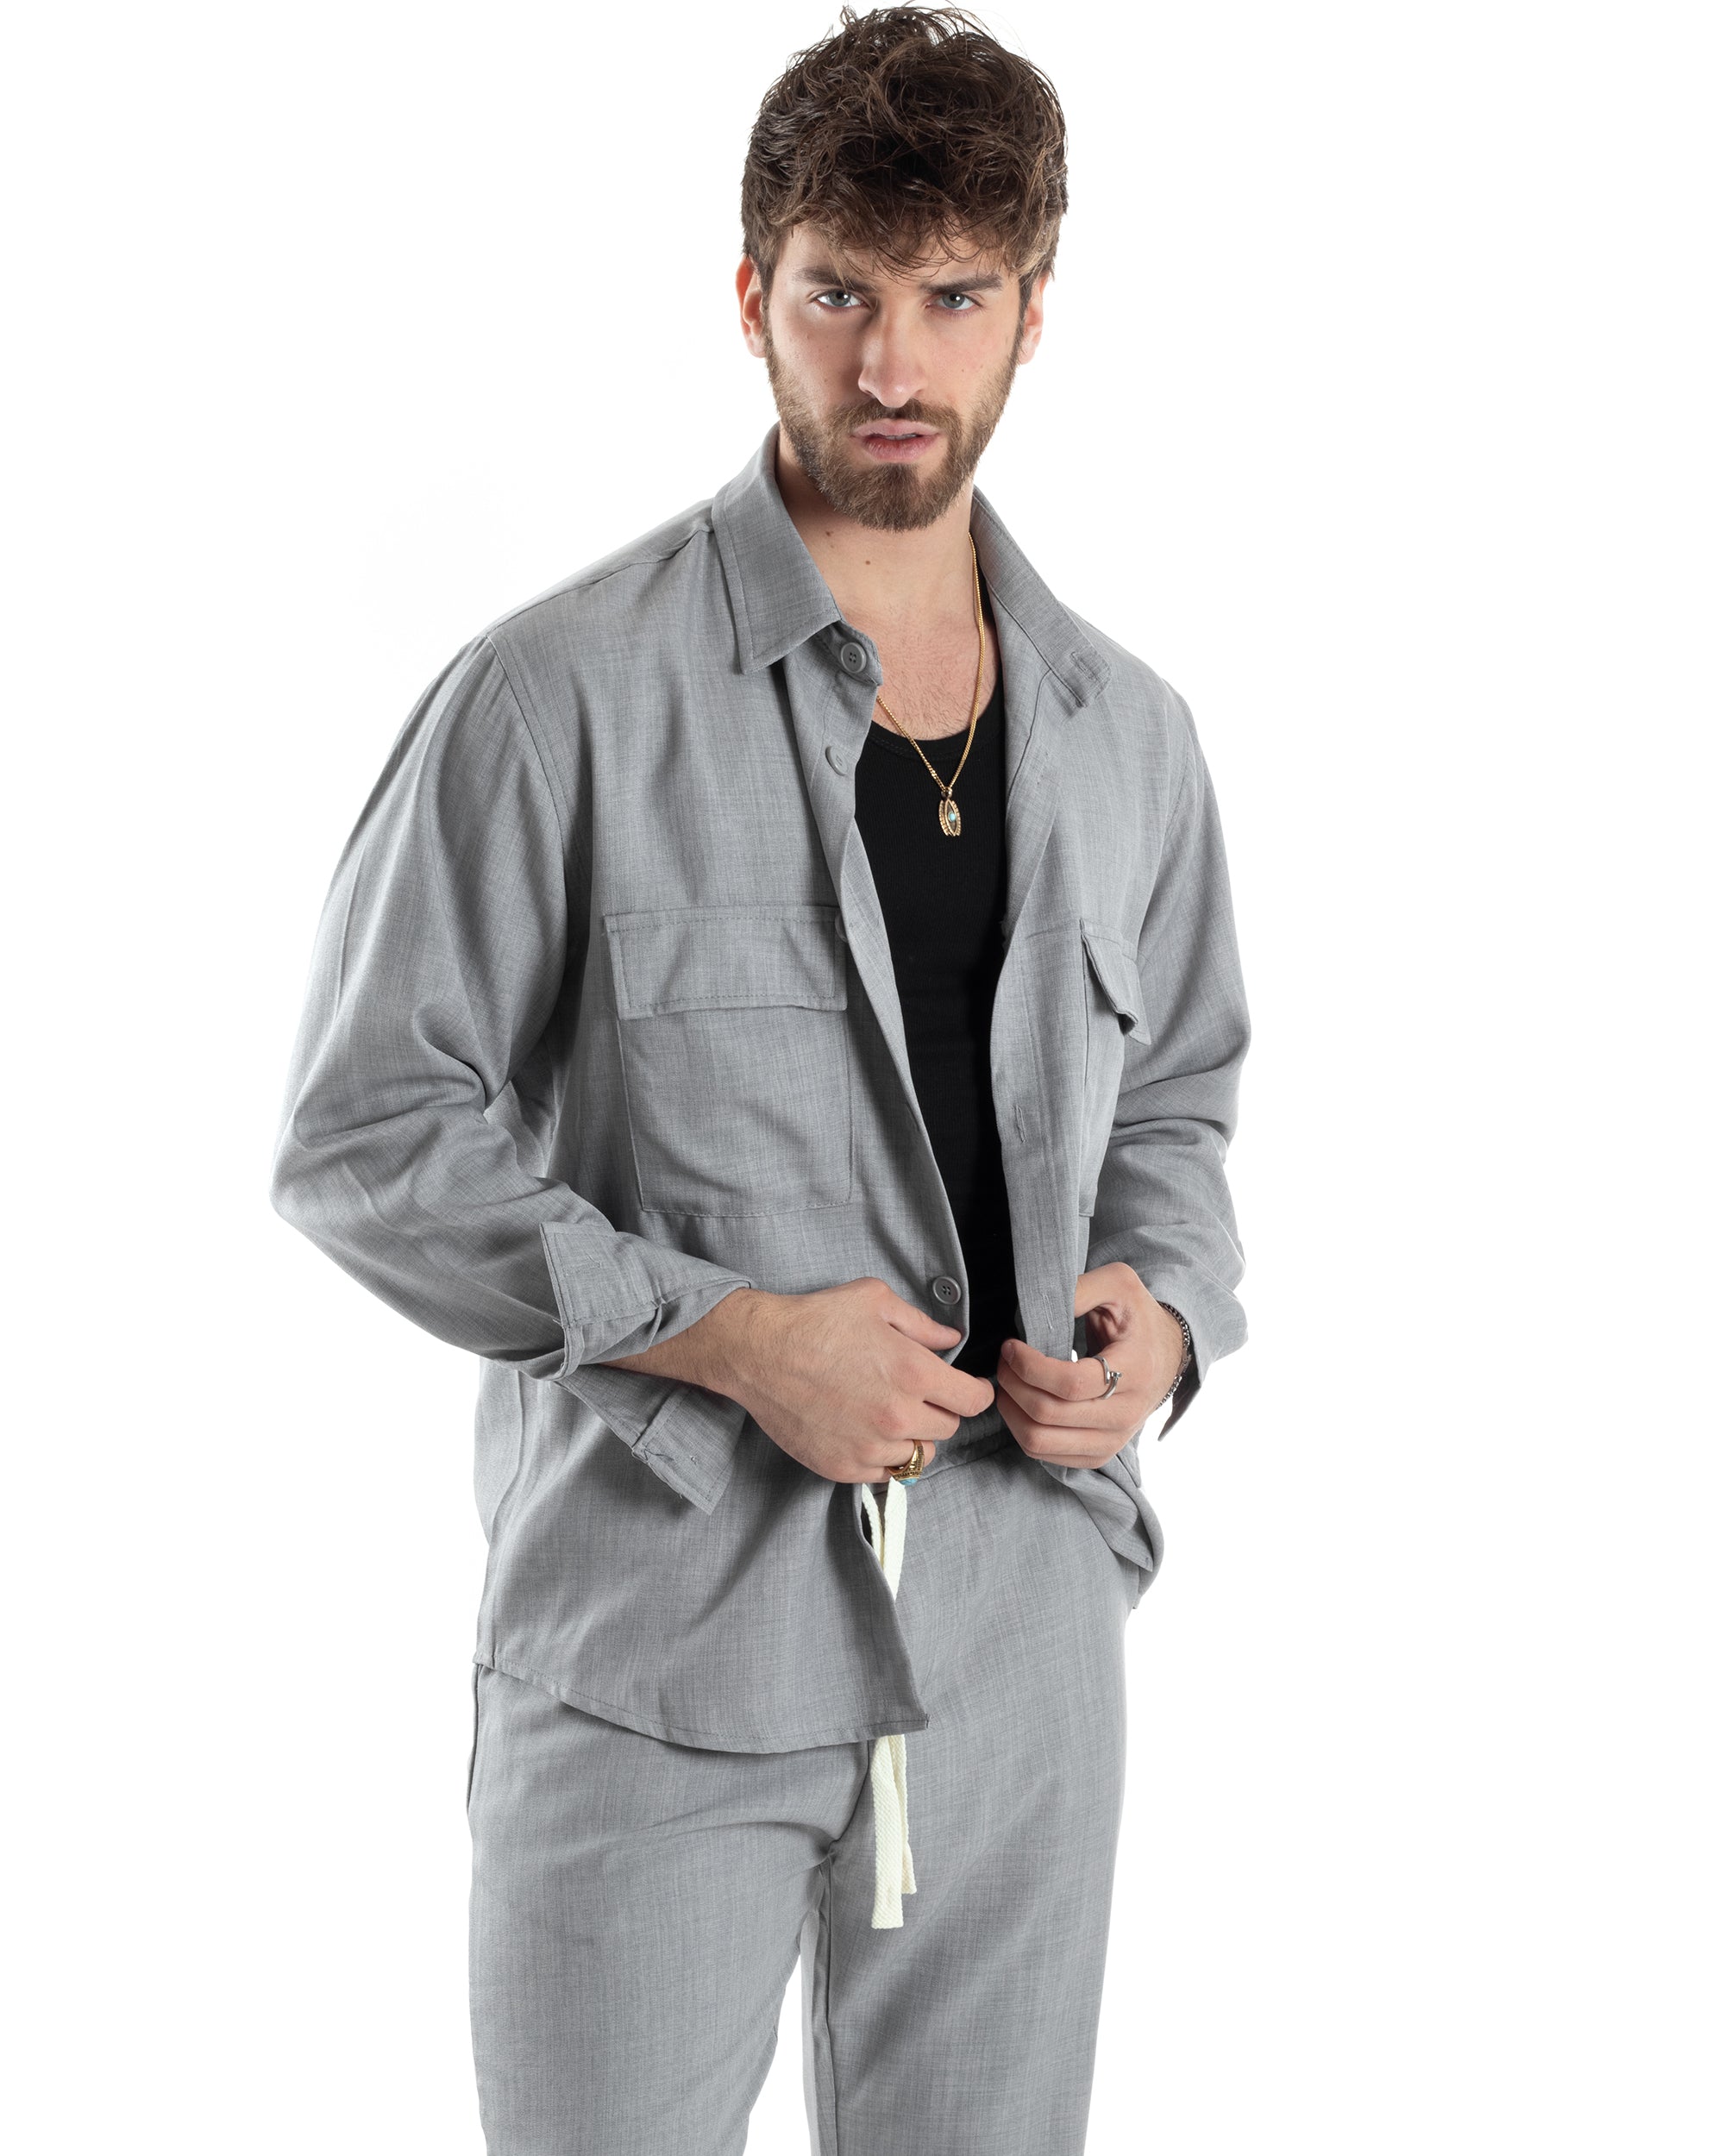 Completo Set Coordinato Uomo Viscosa Camicia Pantaloni Jogger Outfit Melangiato Grigio GIOSAL-OU2454A